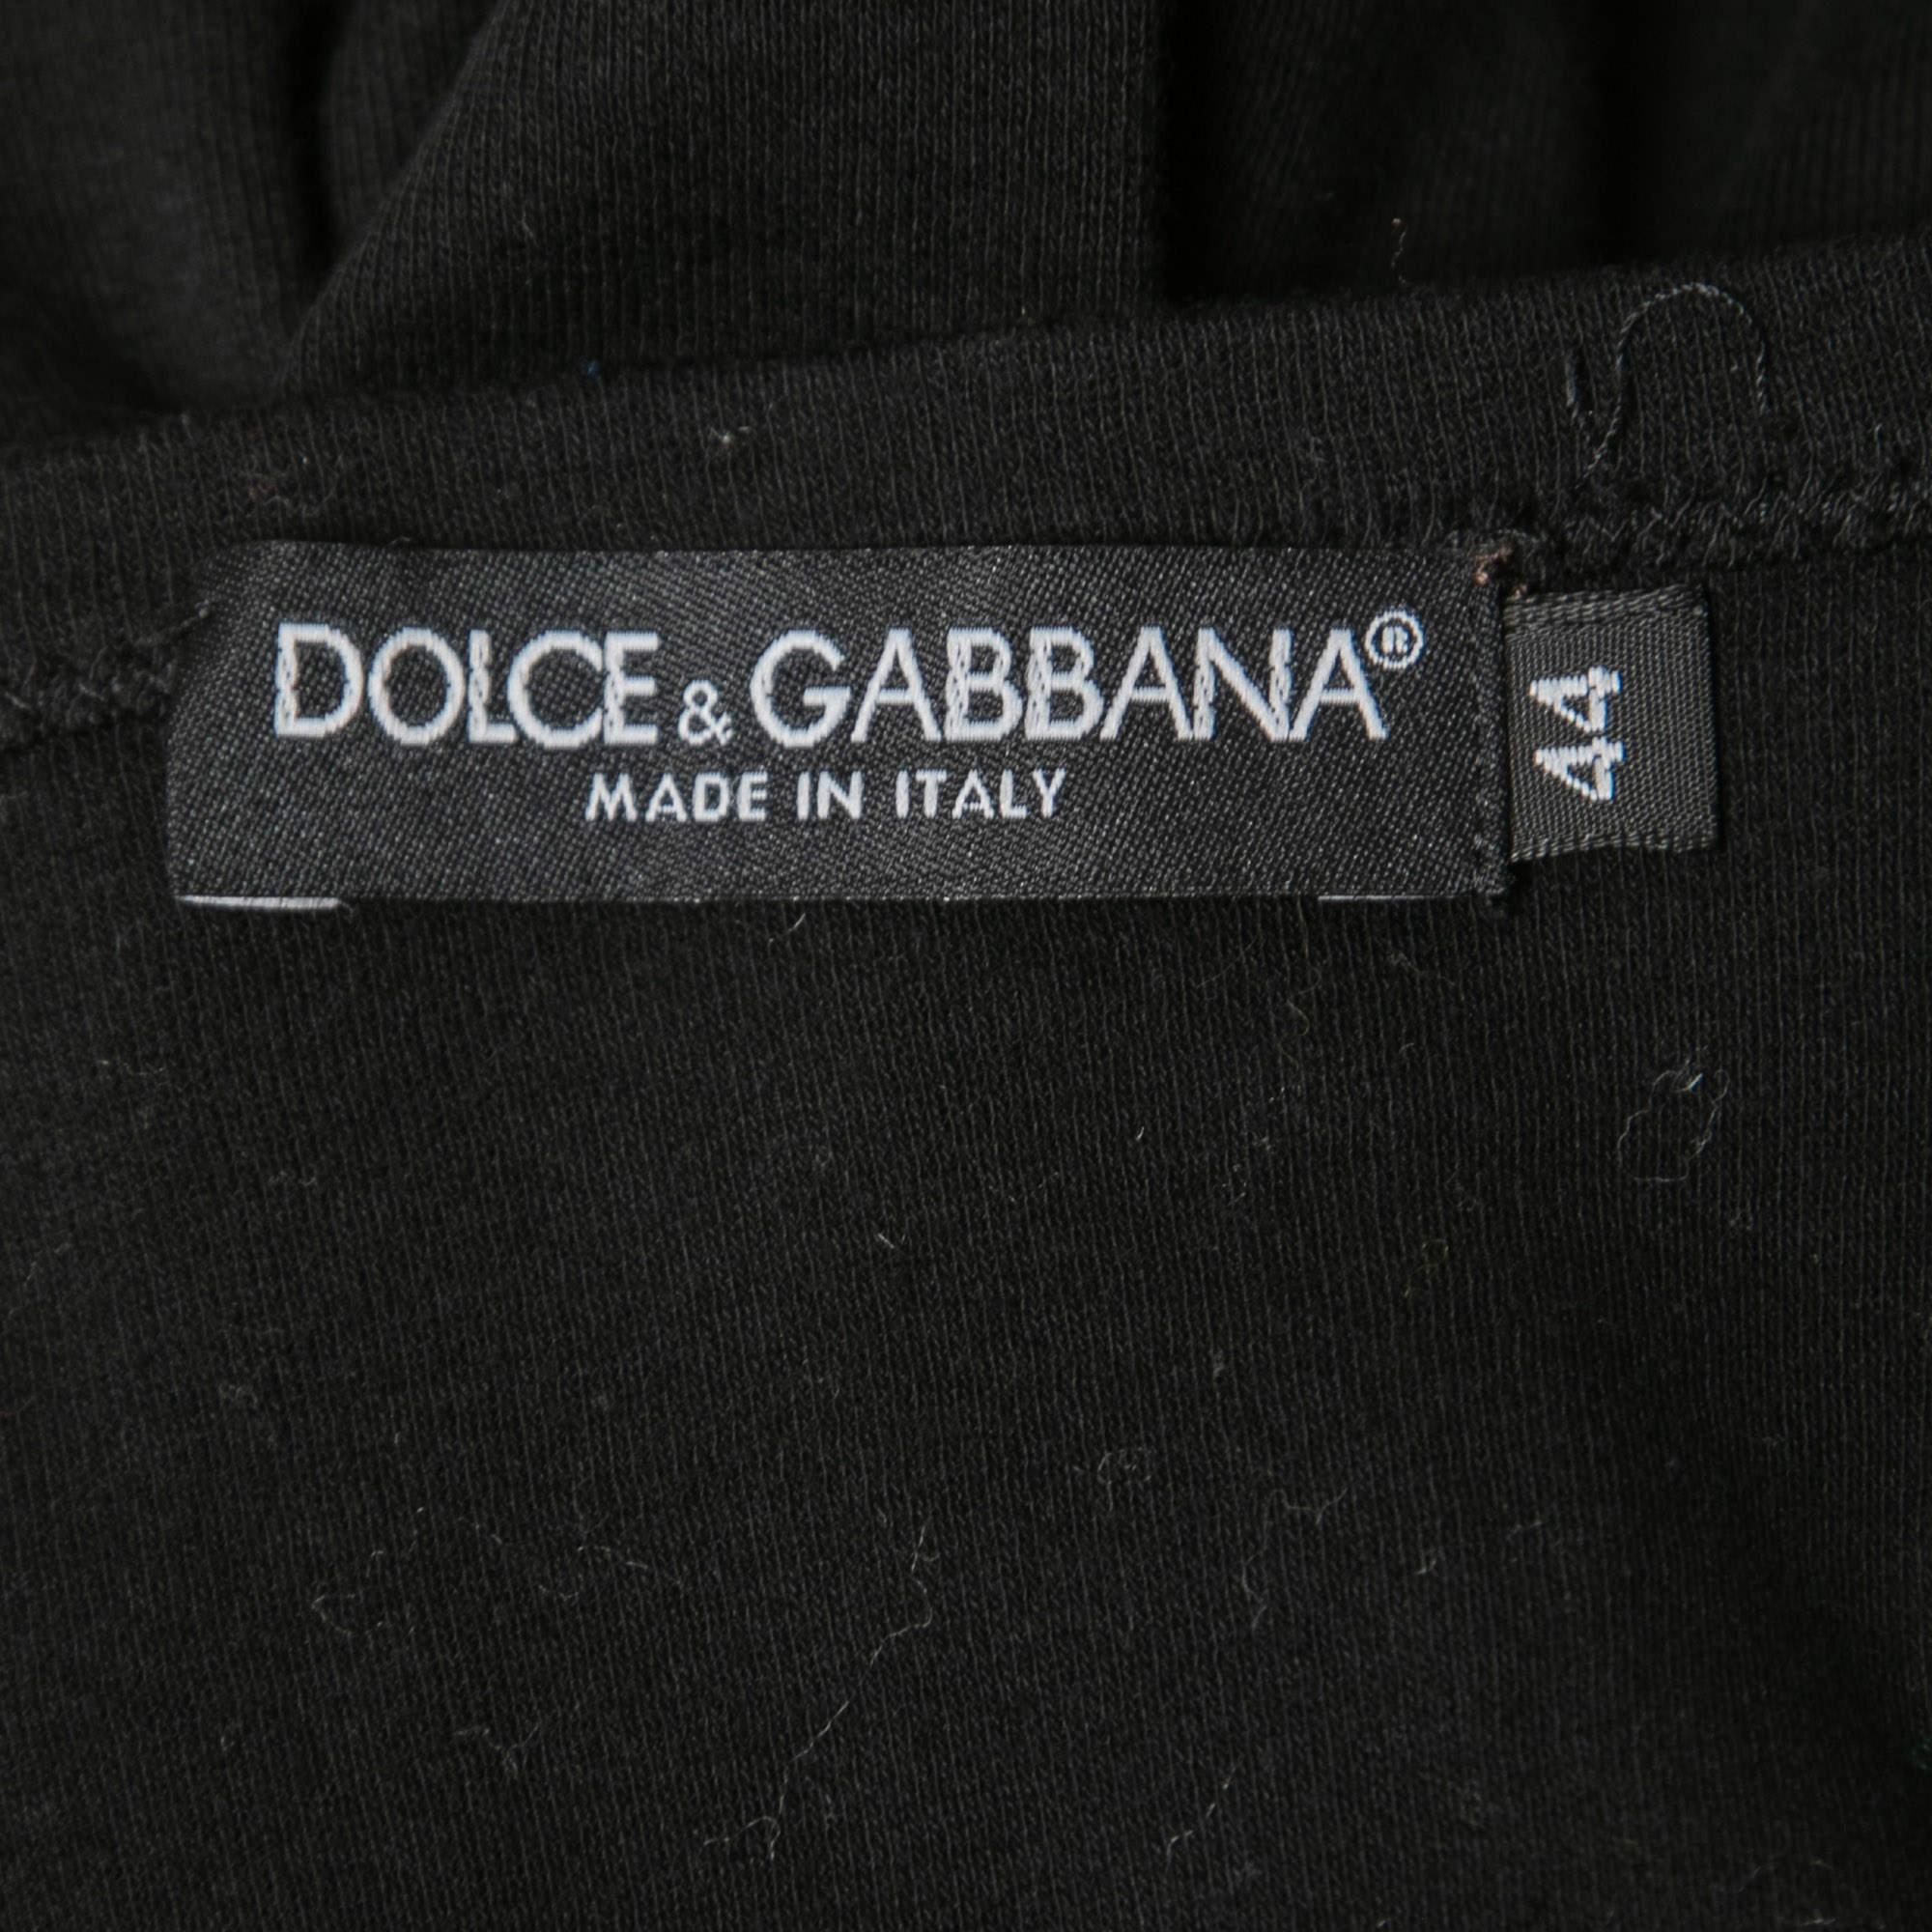 Dolce & Gabbana Black Cotton Knit Tank Top M For Sale 1